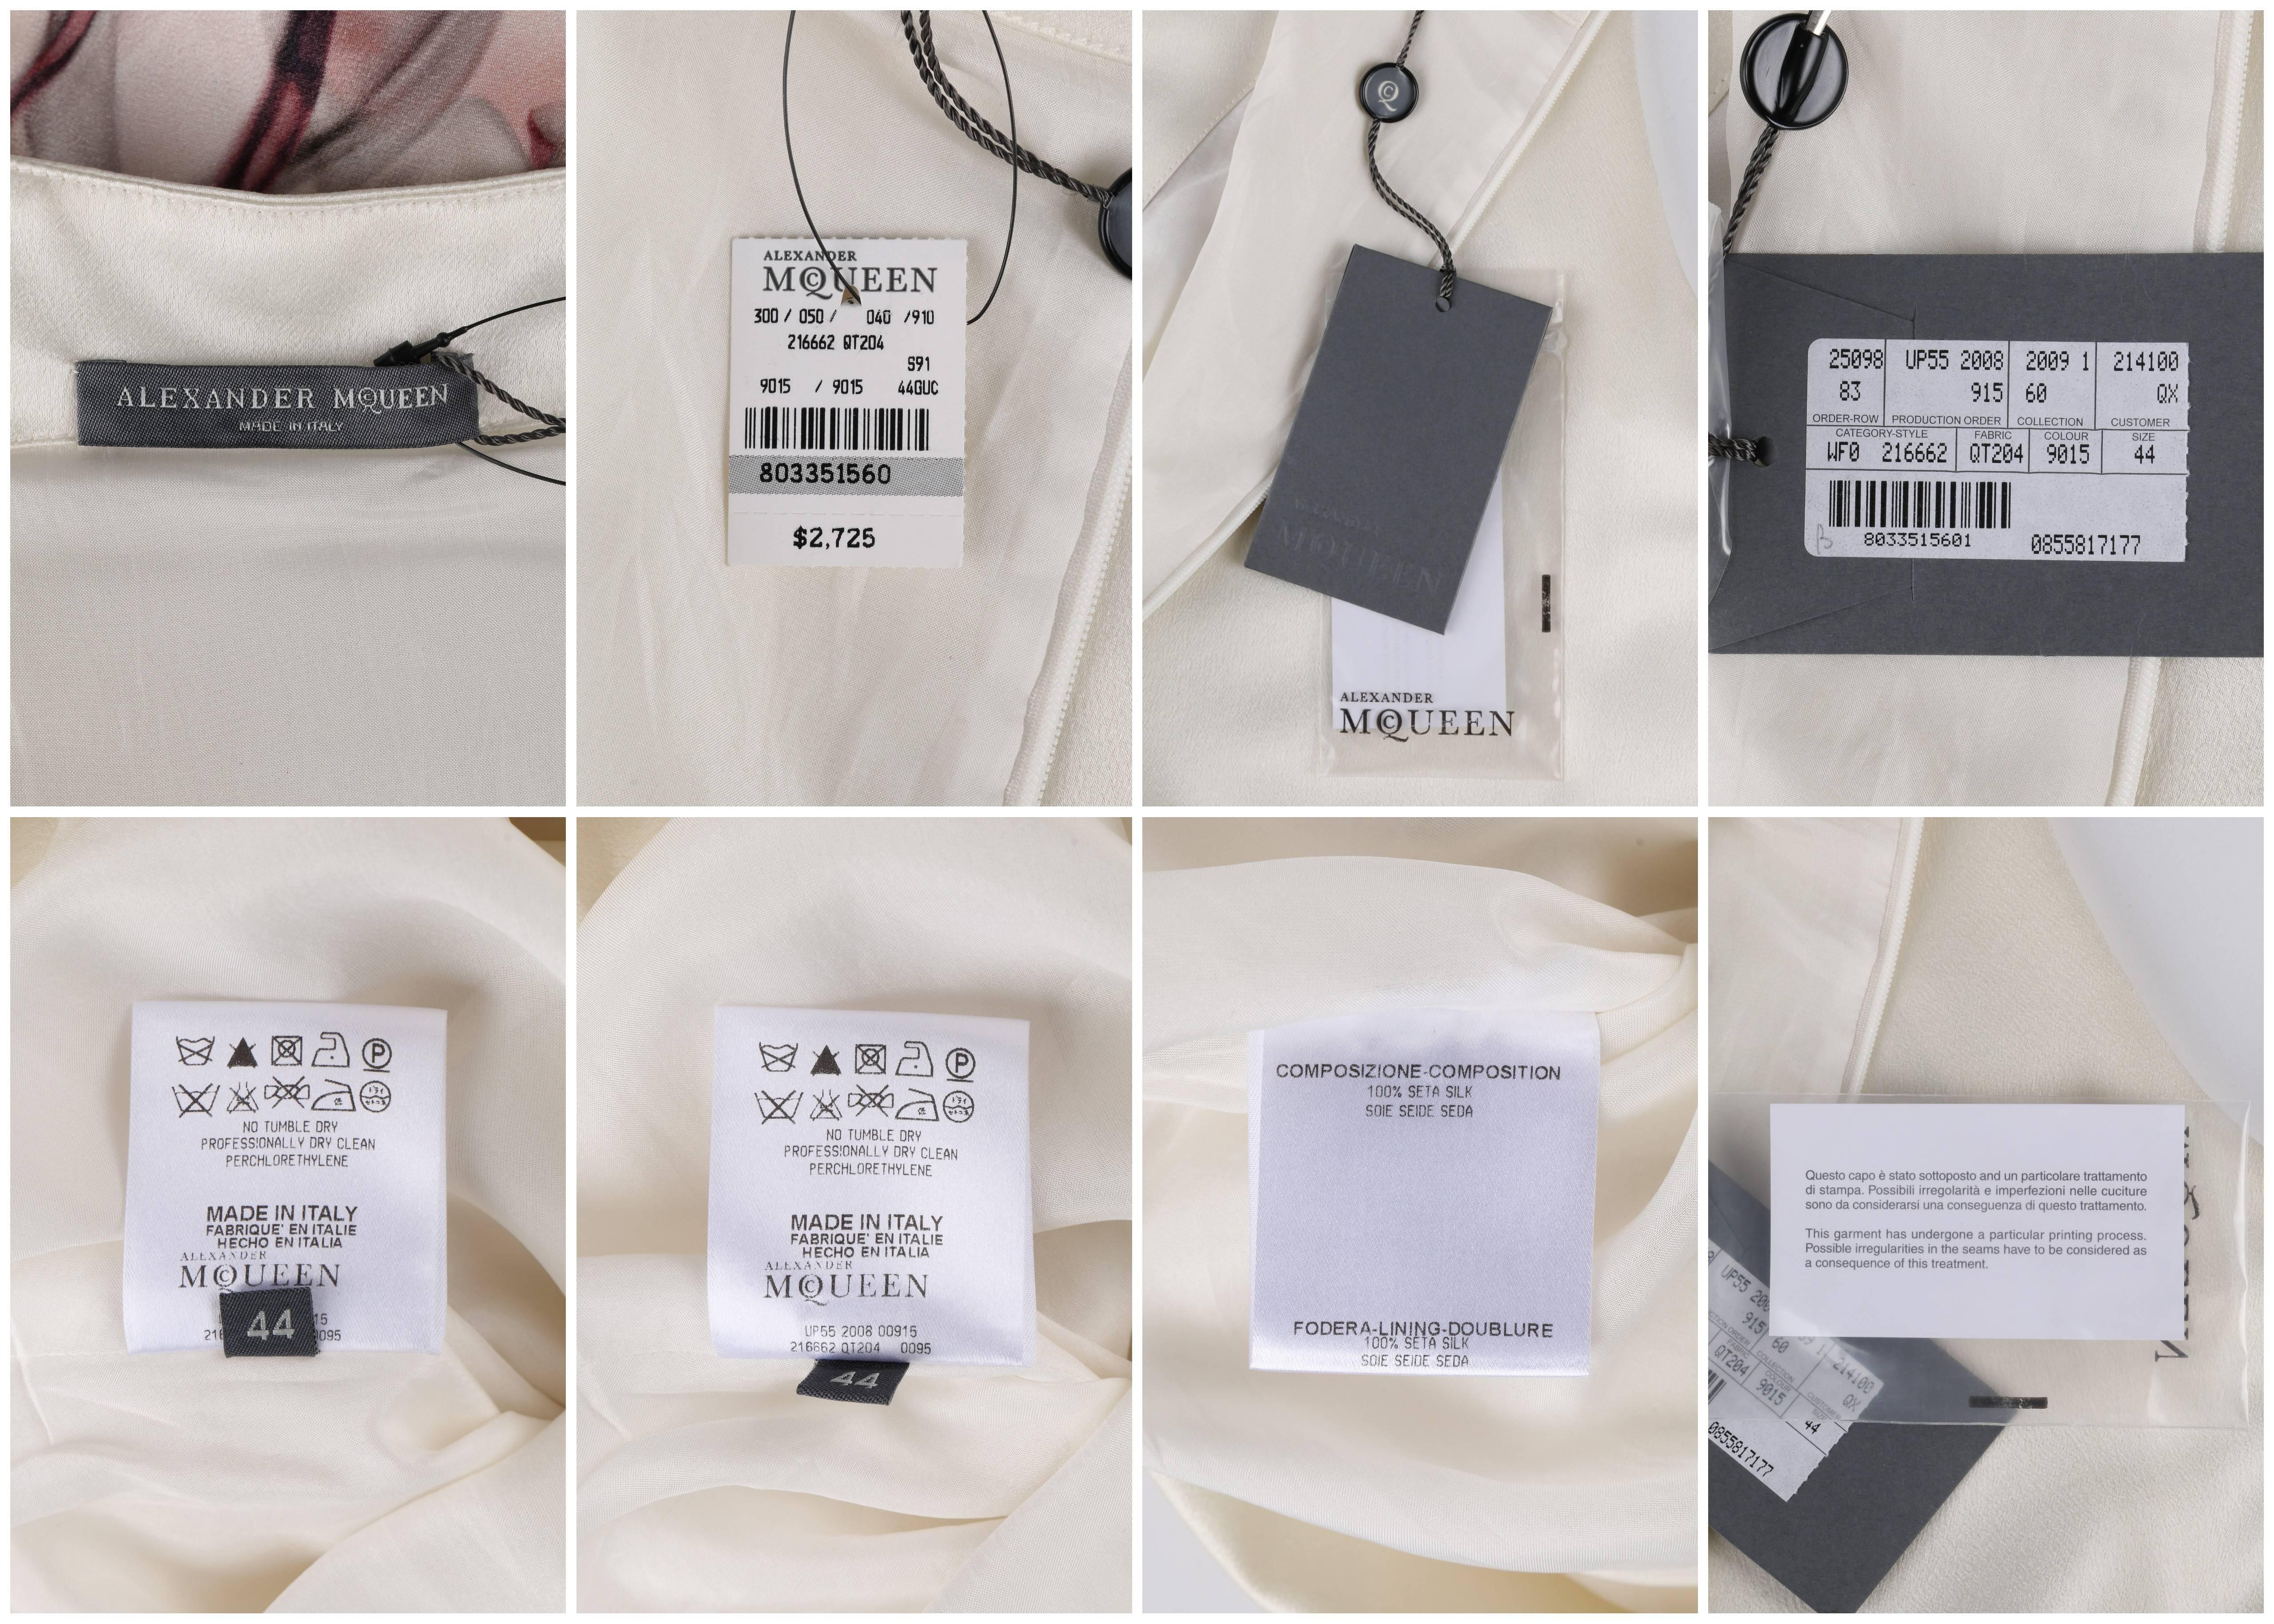 NWT S/S 2009 ALEXANDER McQUEEN White 100% Silk Smoke Print Shift Dress Size 44 For Sale 4